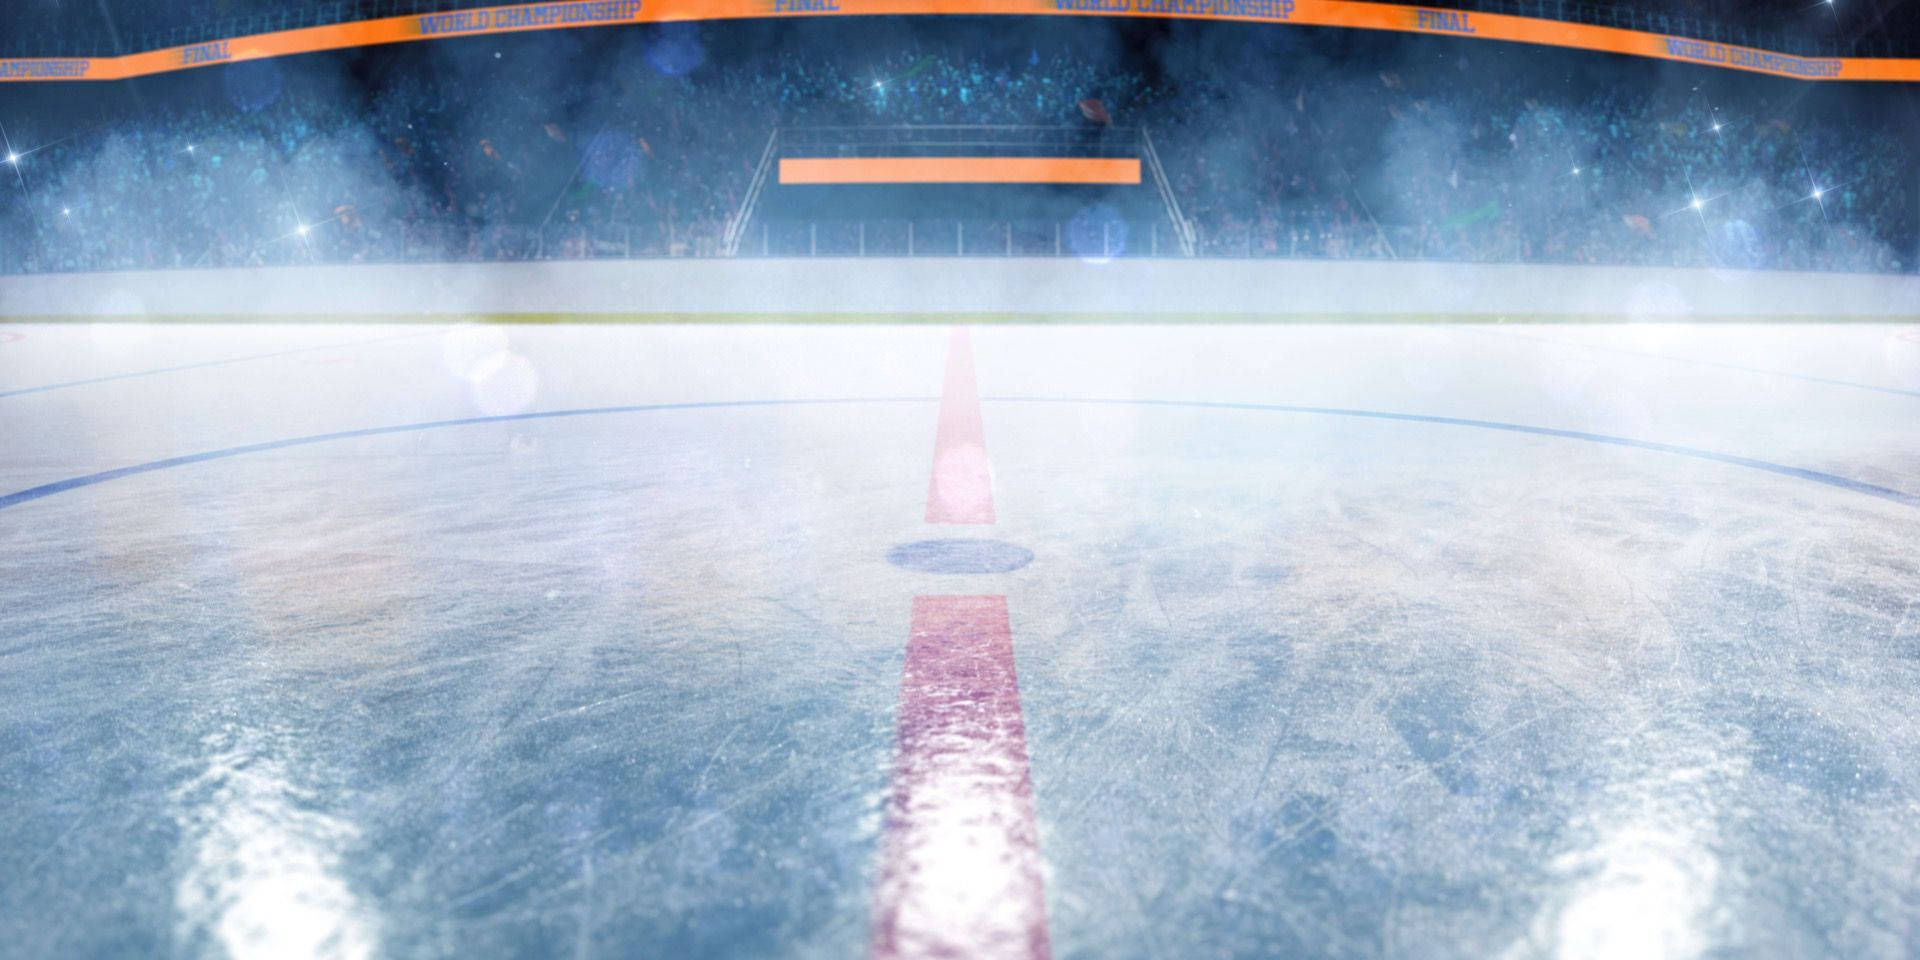 Fri snerig ishockeybane. Wallpaper